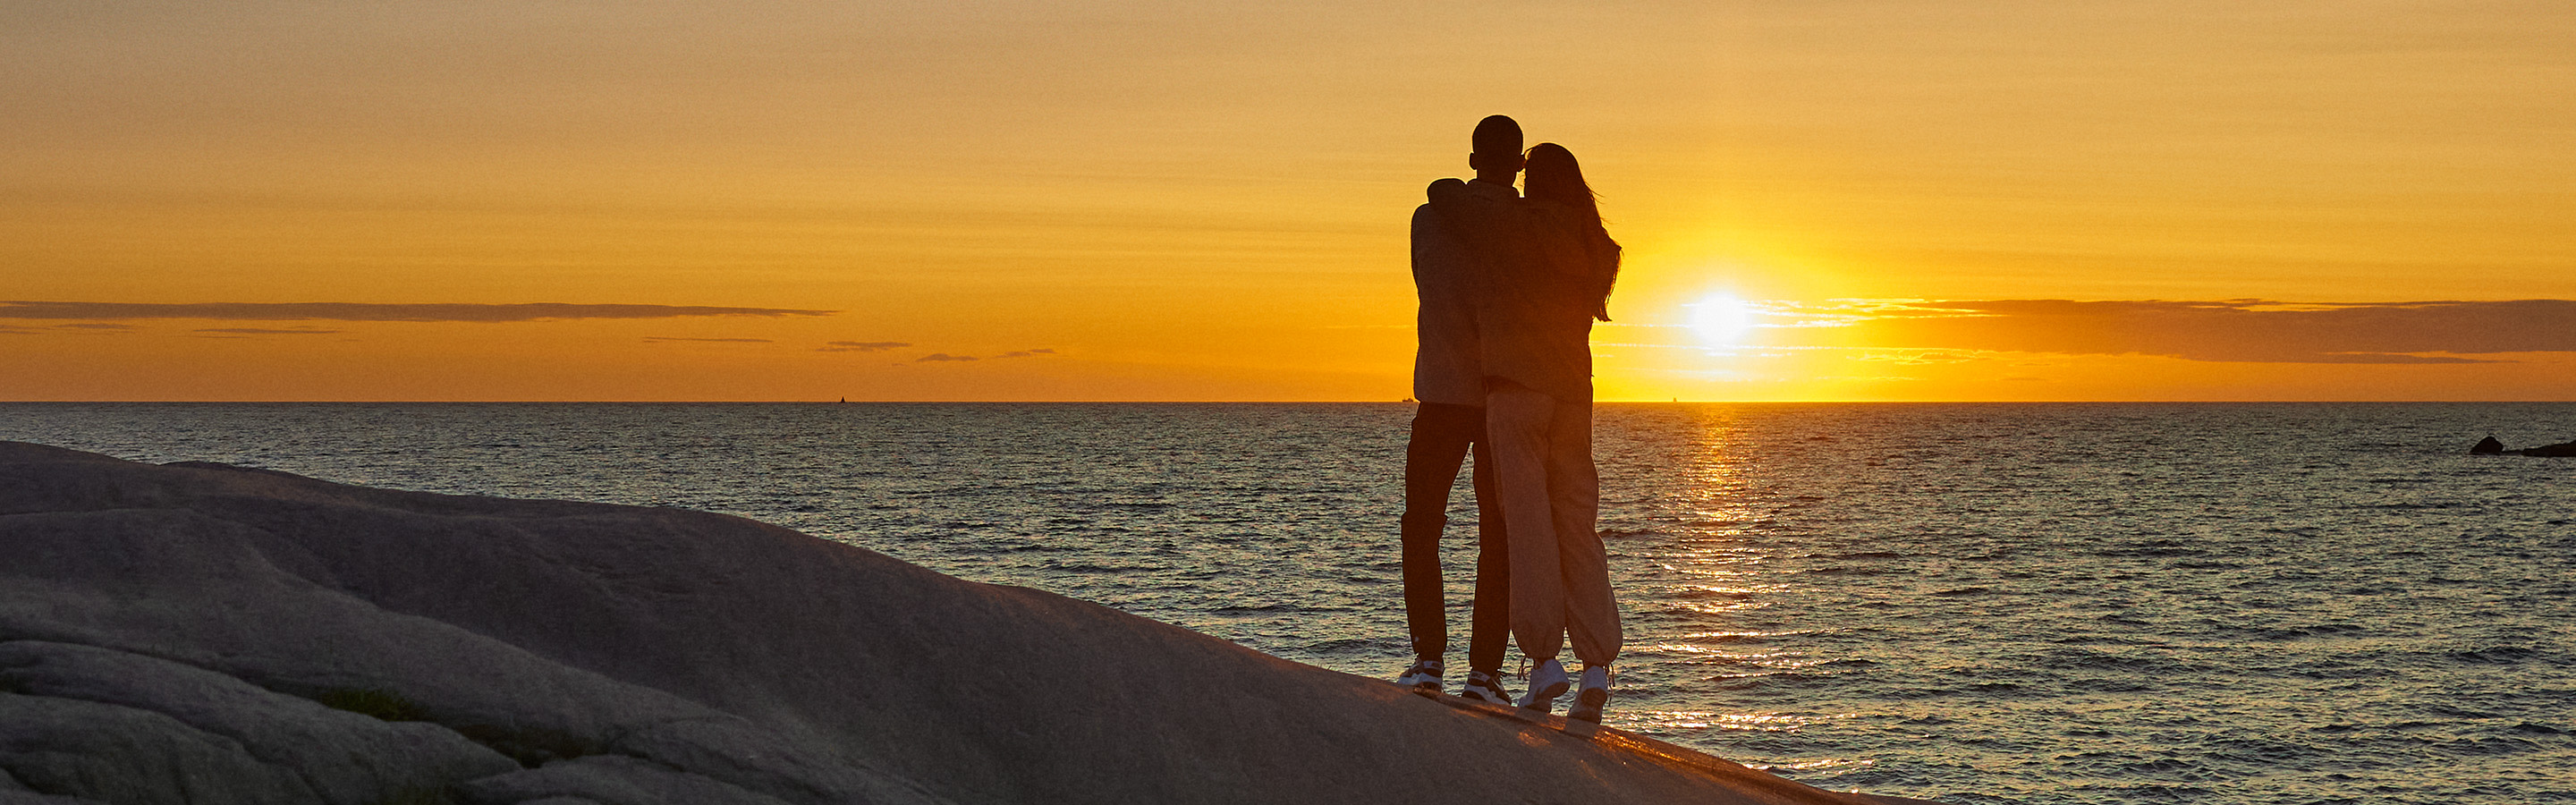 Pariskunta seisoo meren rannalla katsomassa auringonlaskua